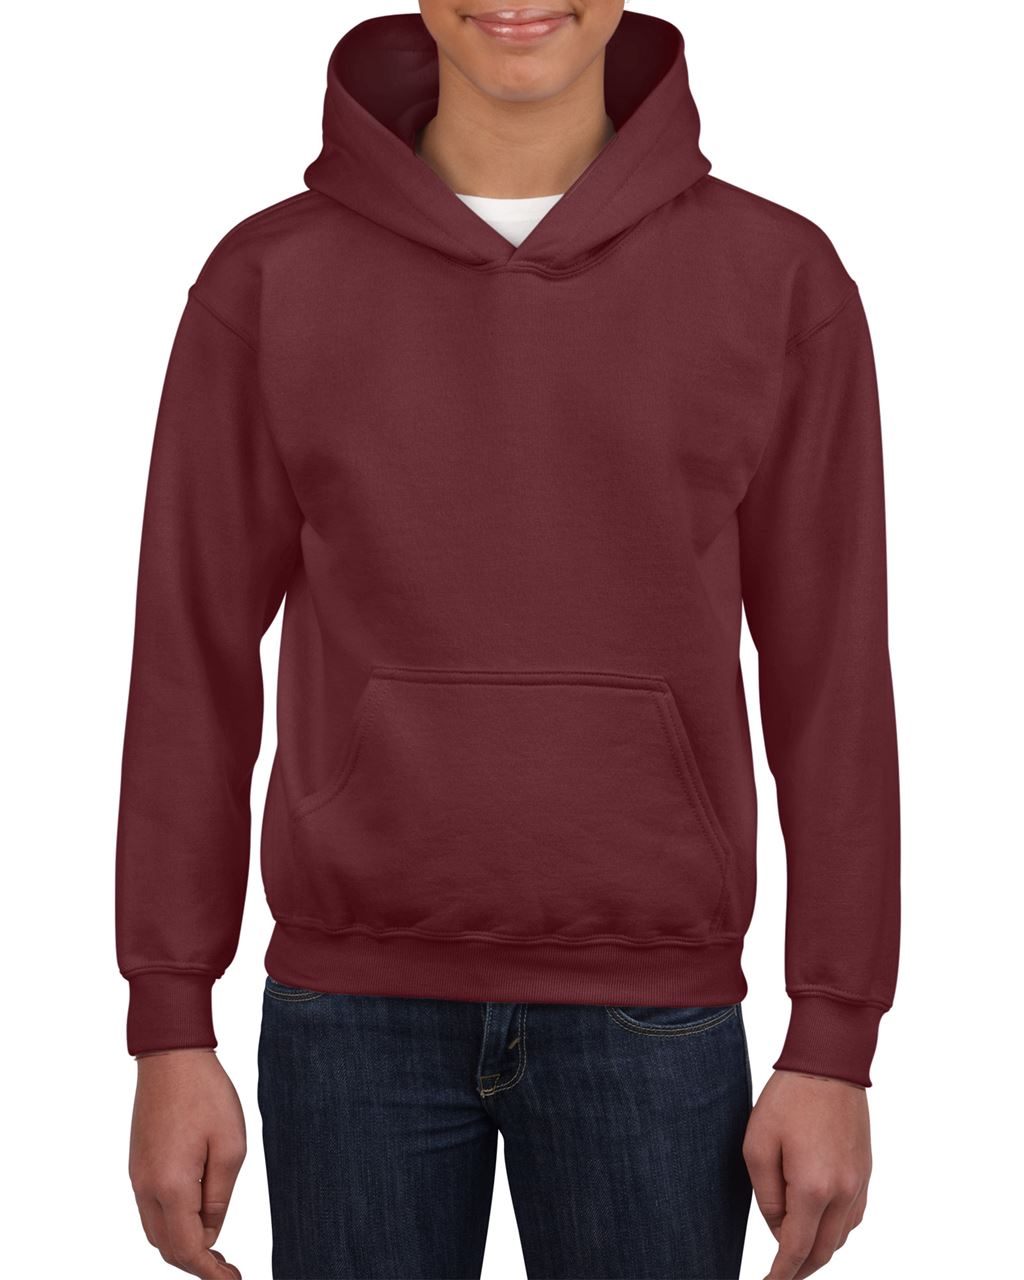 Gildan Heavy Blend™ Youth Hooded Sweatshirt - red